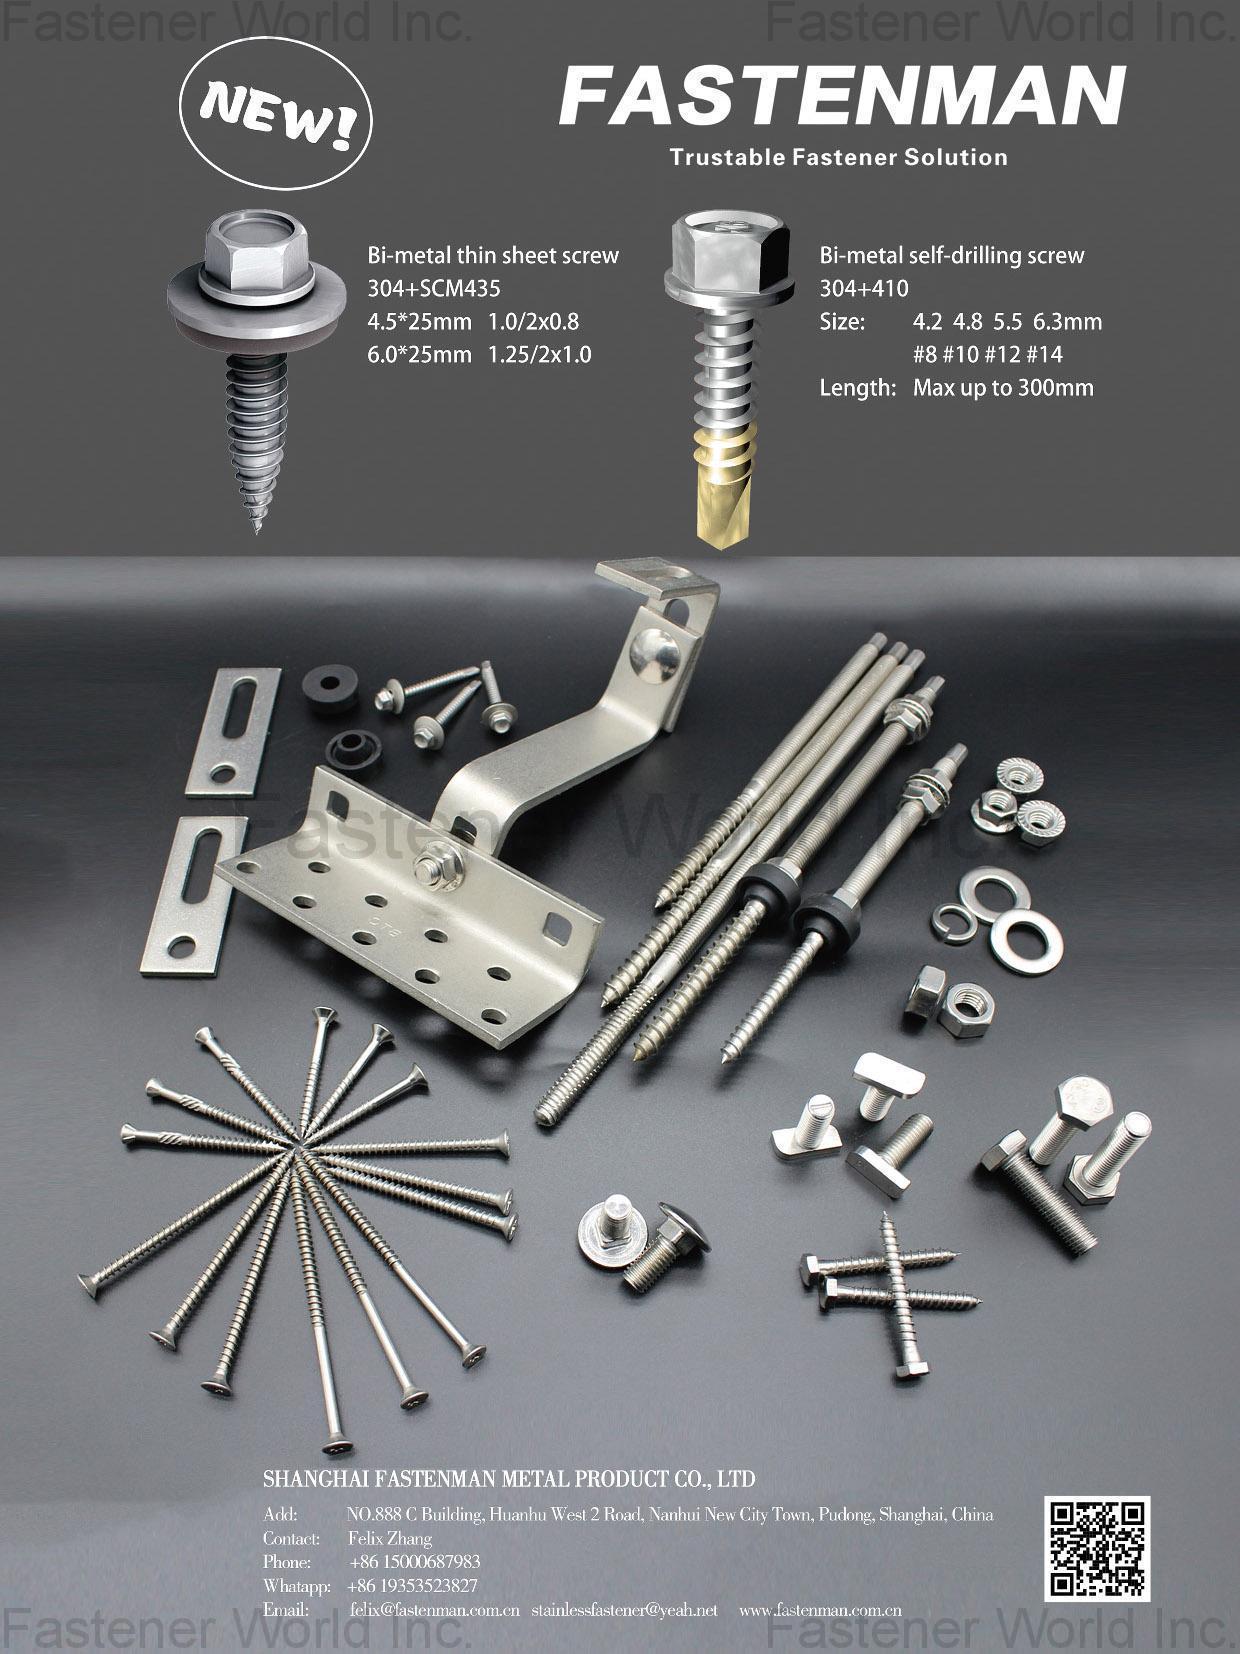 SHANGHAI FASTENMAN METAL PRODUCT CO., LTD. , Bi-metal Thin Sheet Screws, Bi-metal Self-drilling Screws, Nuts, Bolts, Machine Screws, Socket Screws, Washers